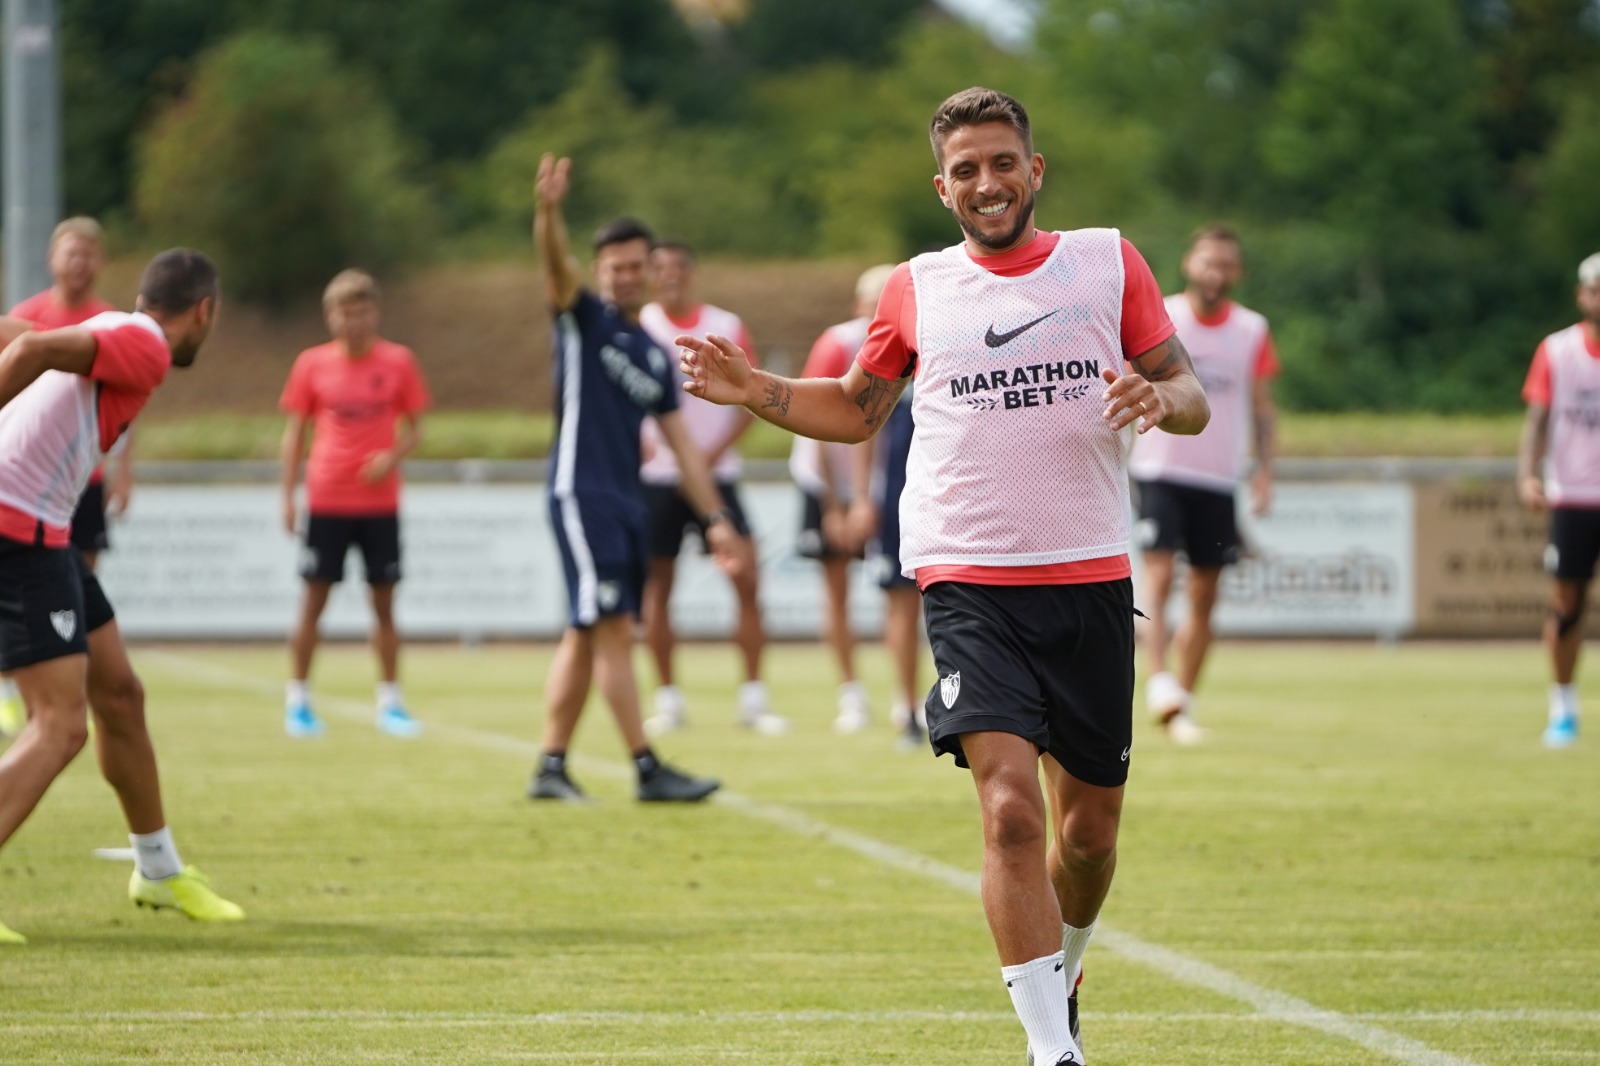 Carriço in training for Sevilla FC